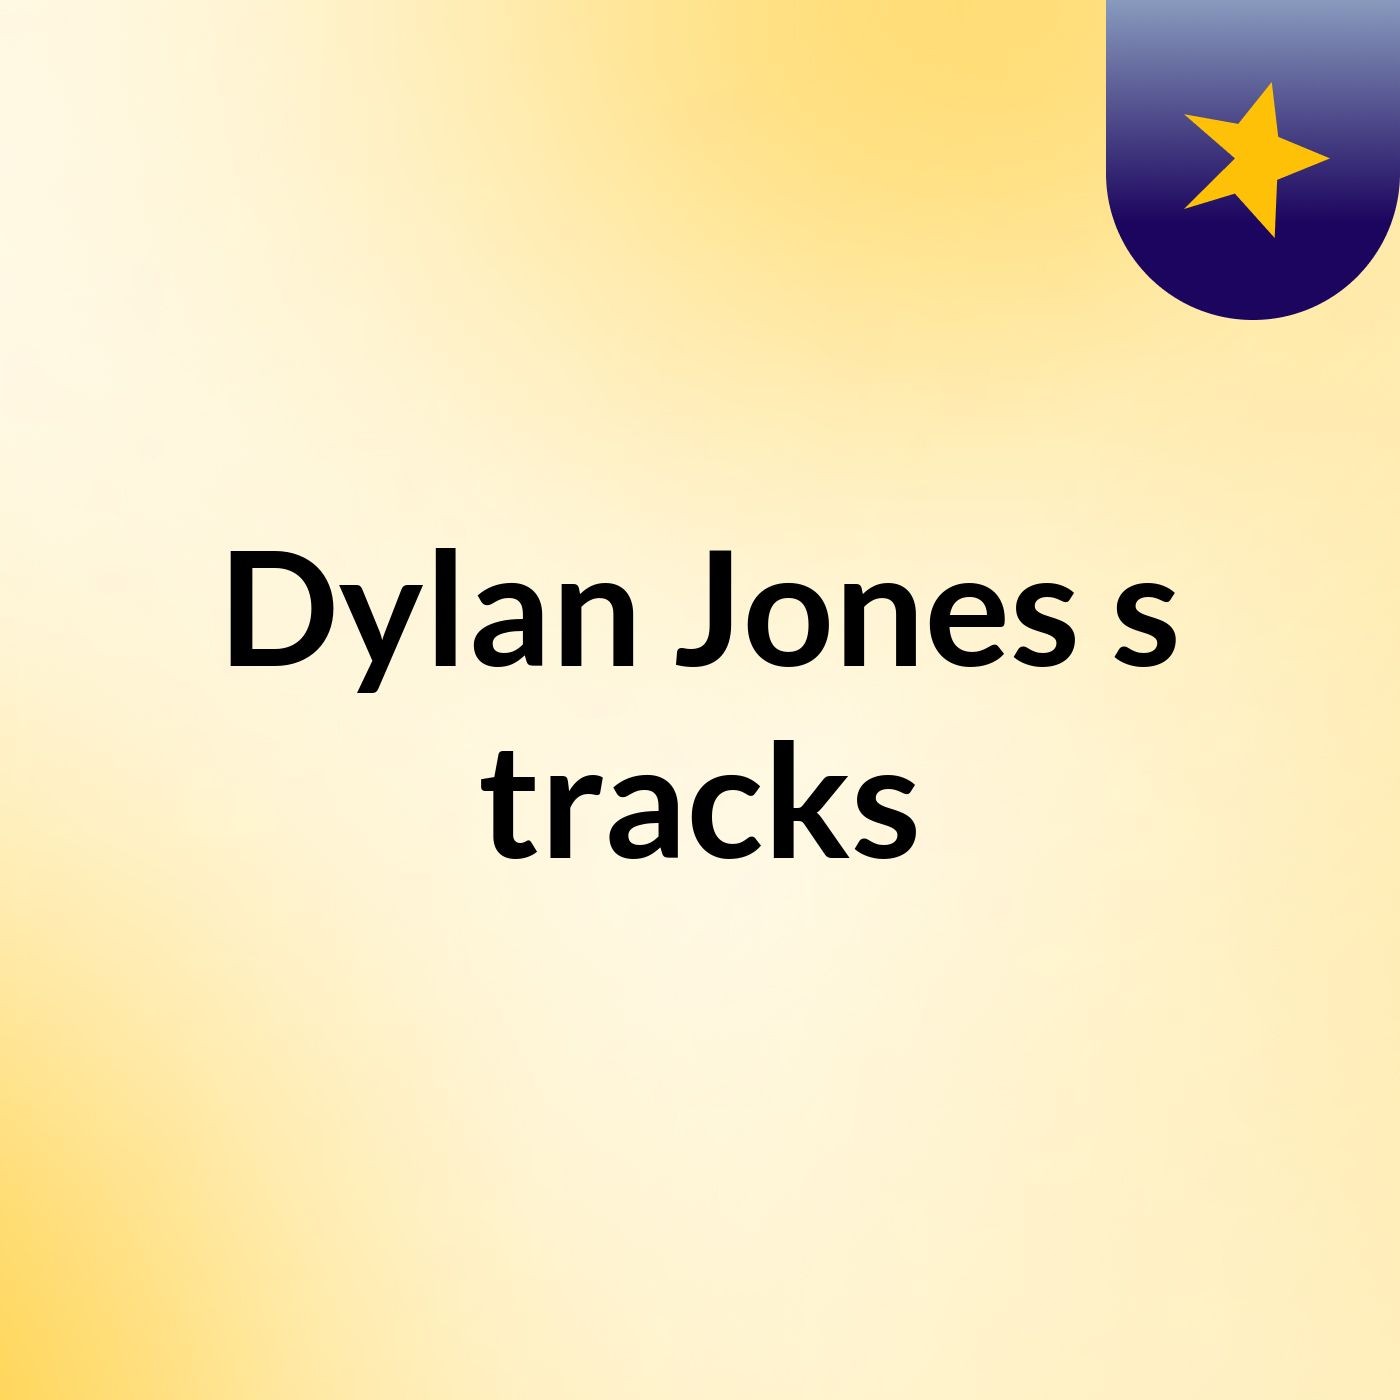 Dylan Jones's tracks